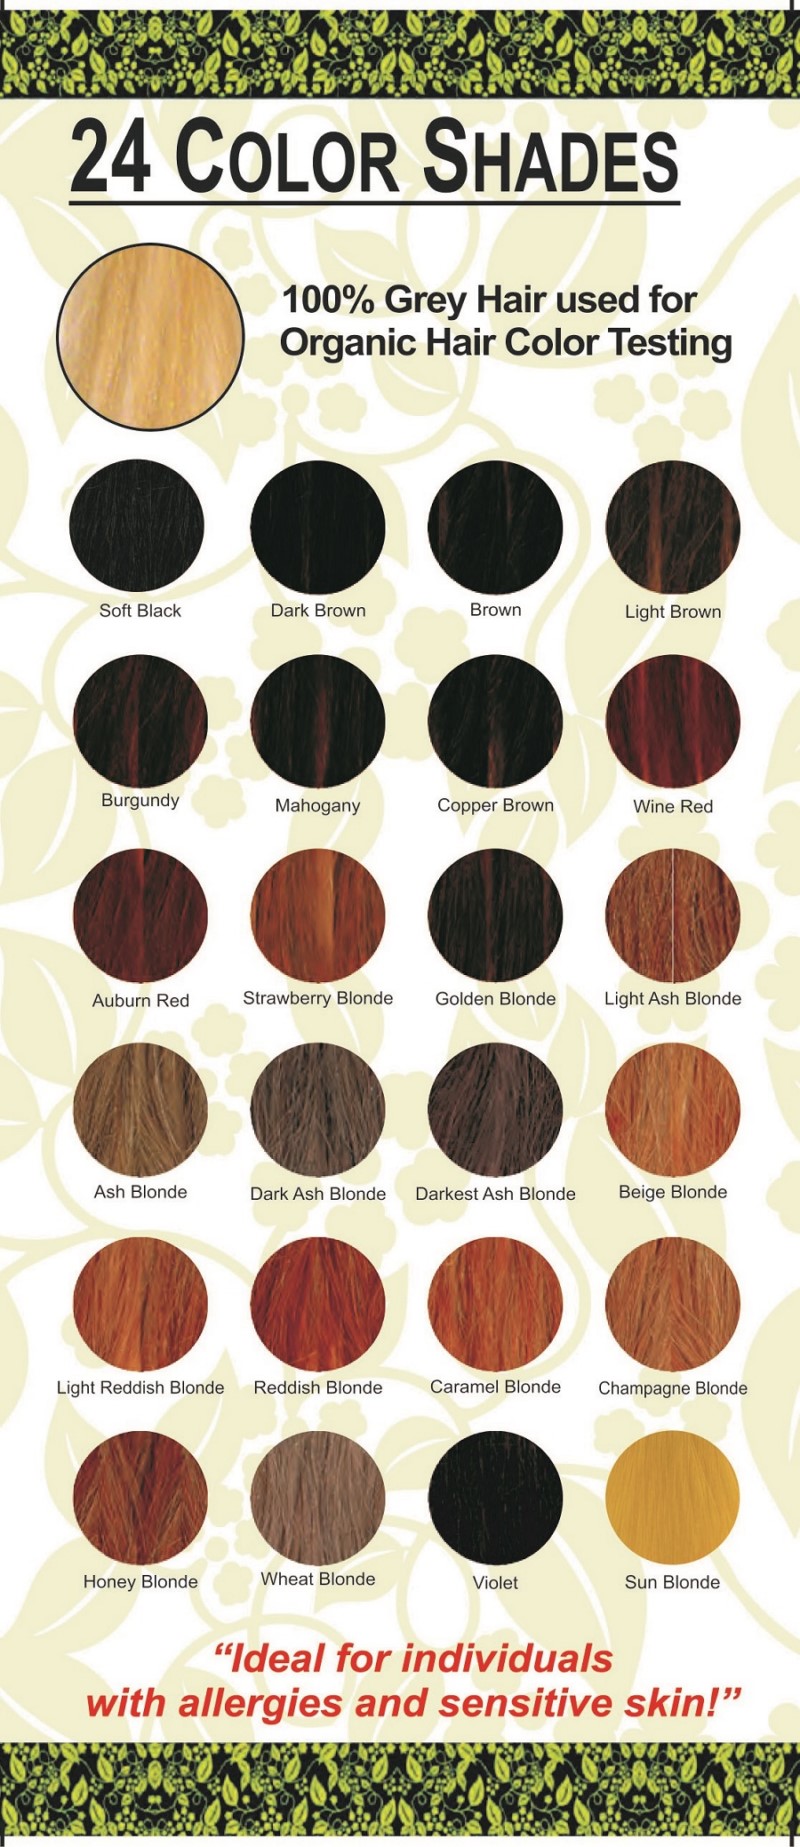 Radico + hair colour + Certified Organic Hair Color Dye -Brown Shades + Copper Brown (100 gm) + discount